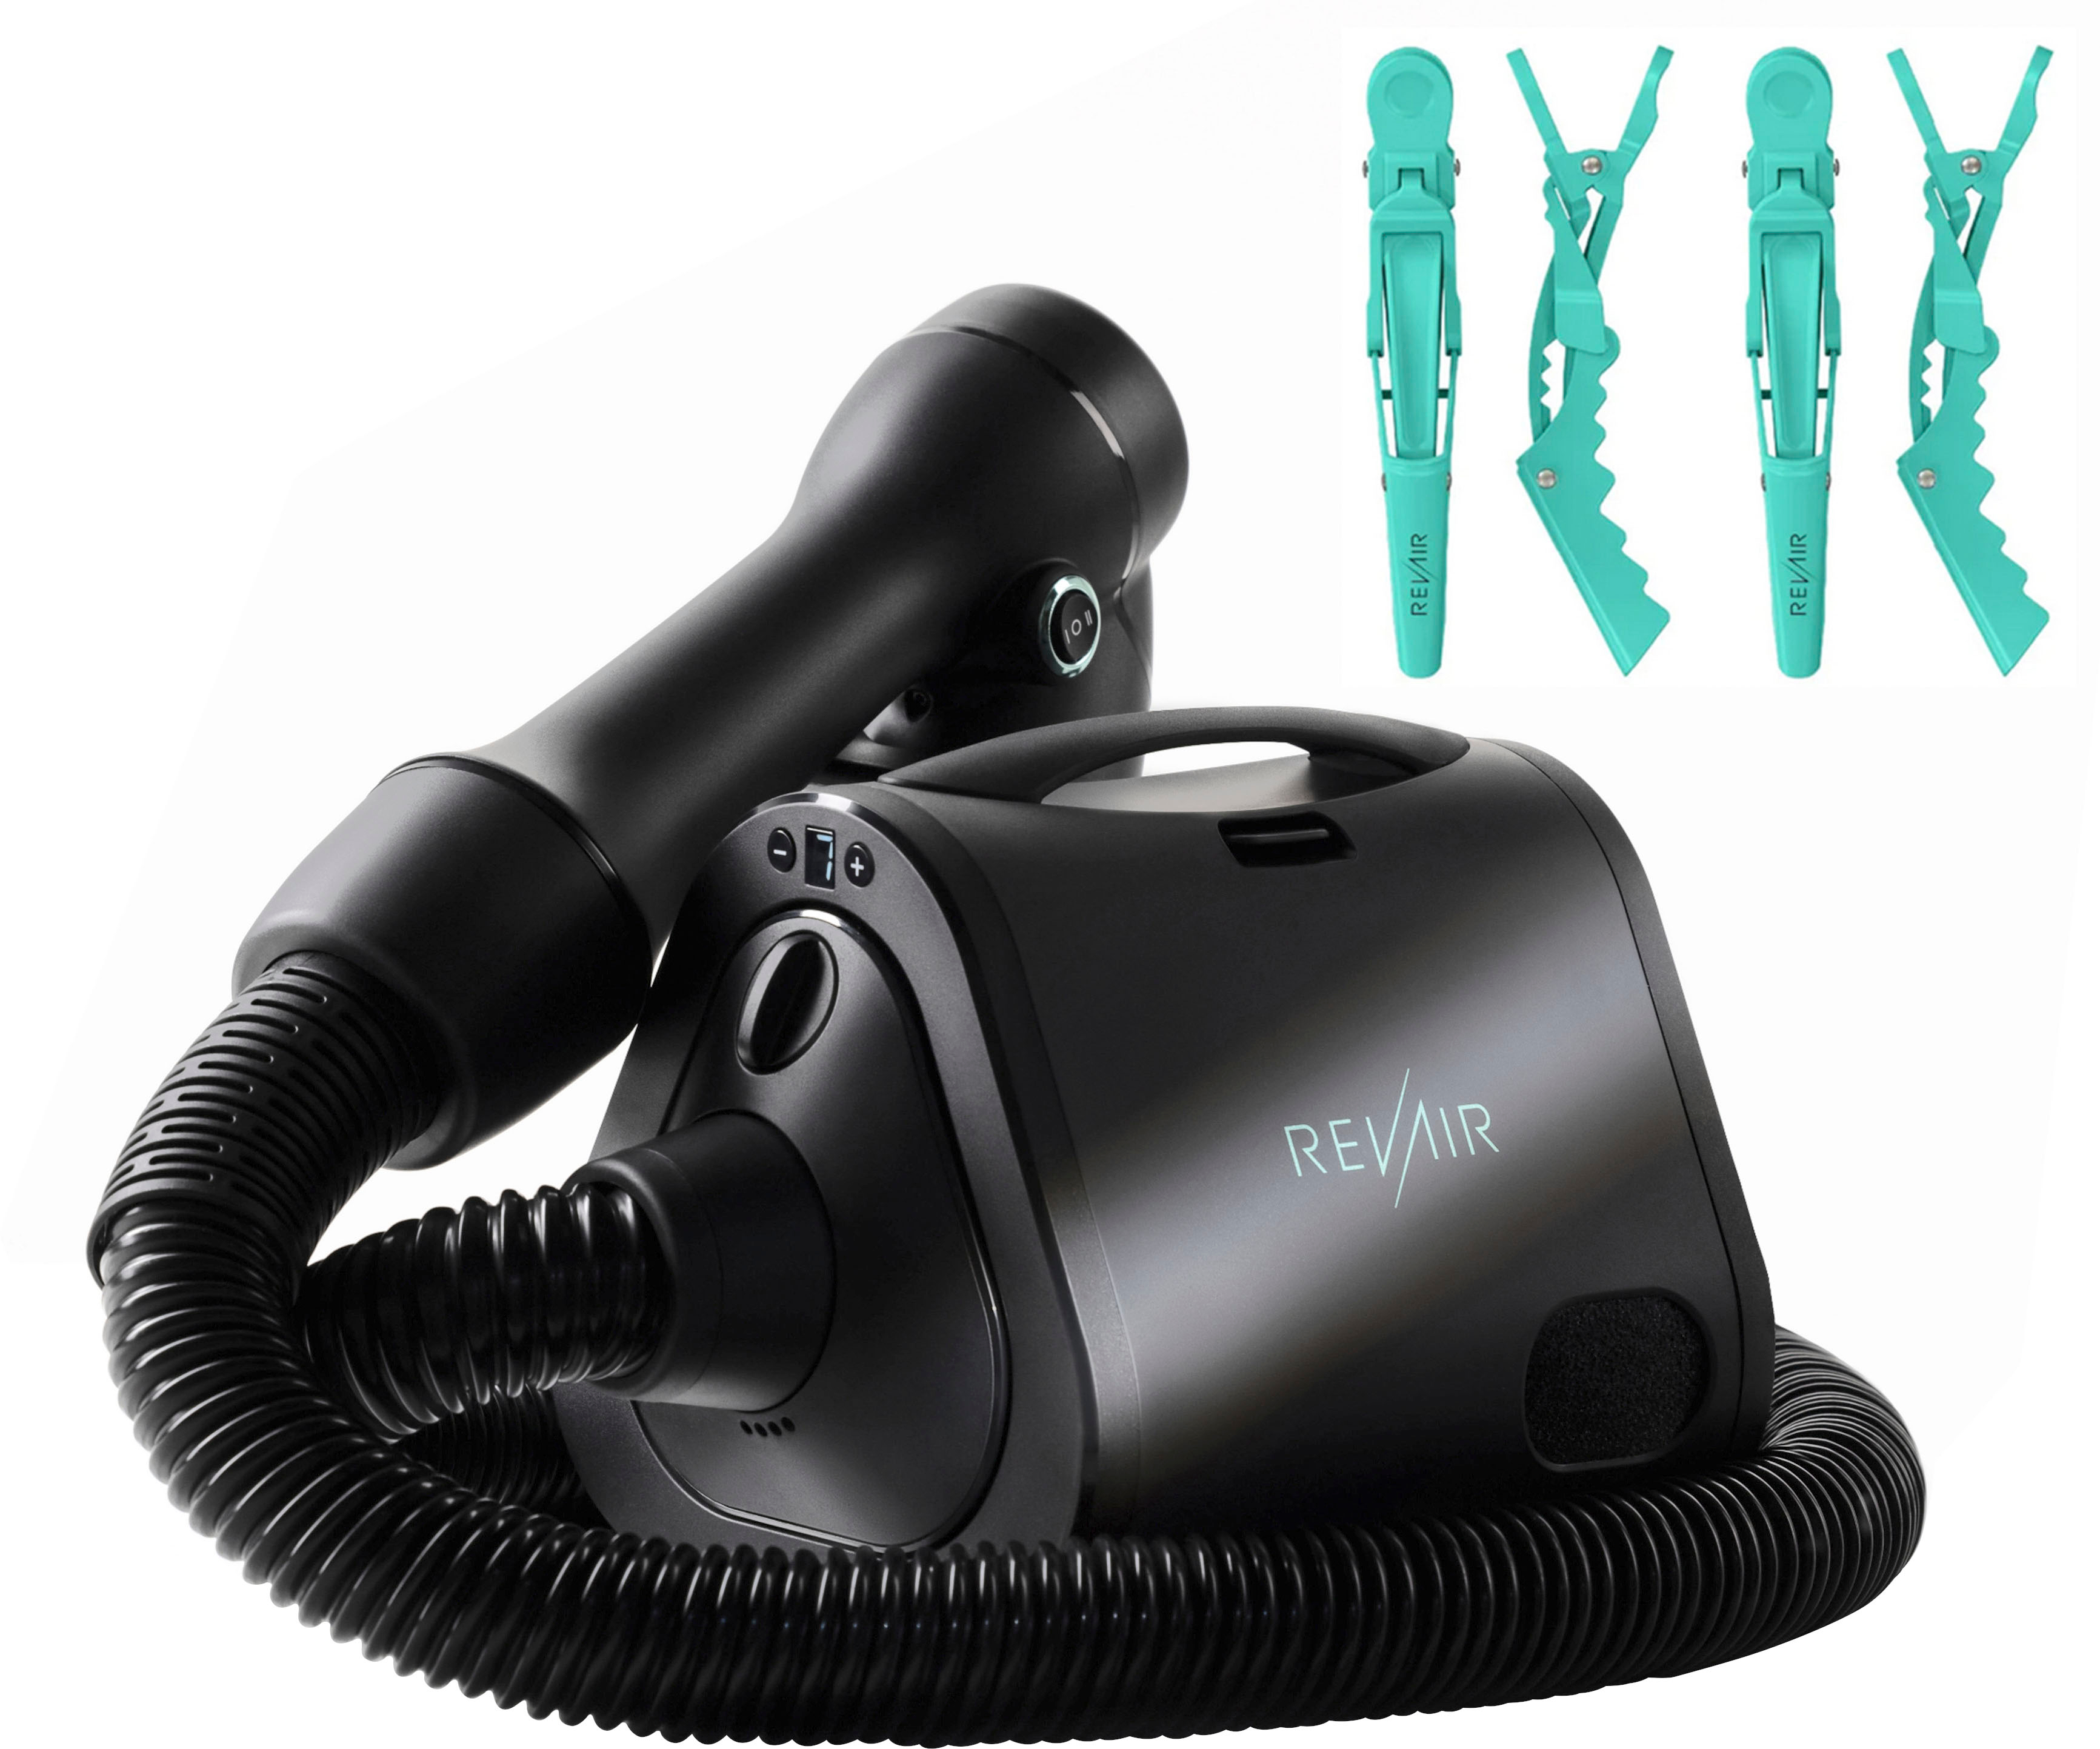 RevAir - Reverse-Air Hair Dryer with Hair Clips - Black